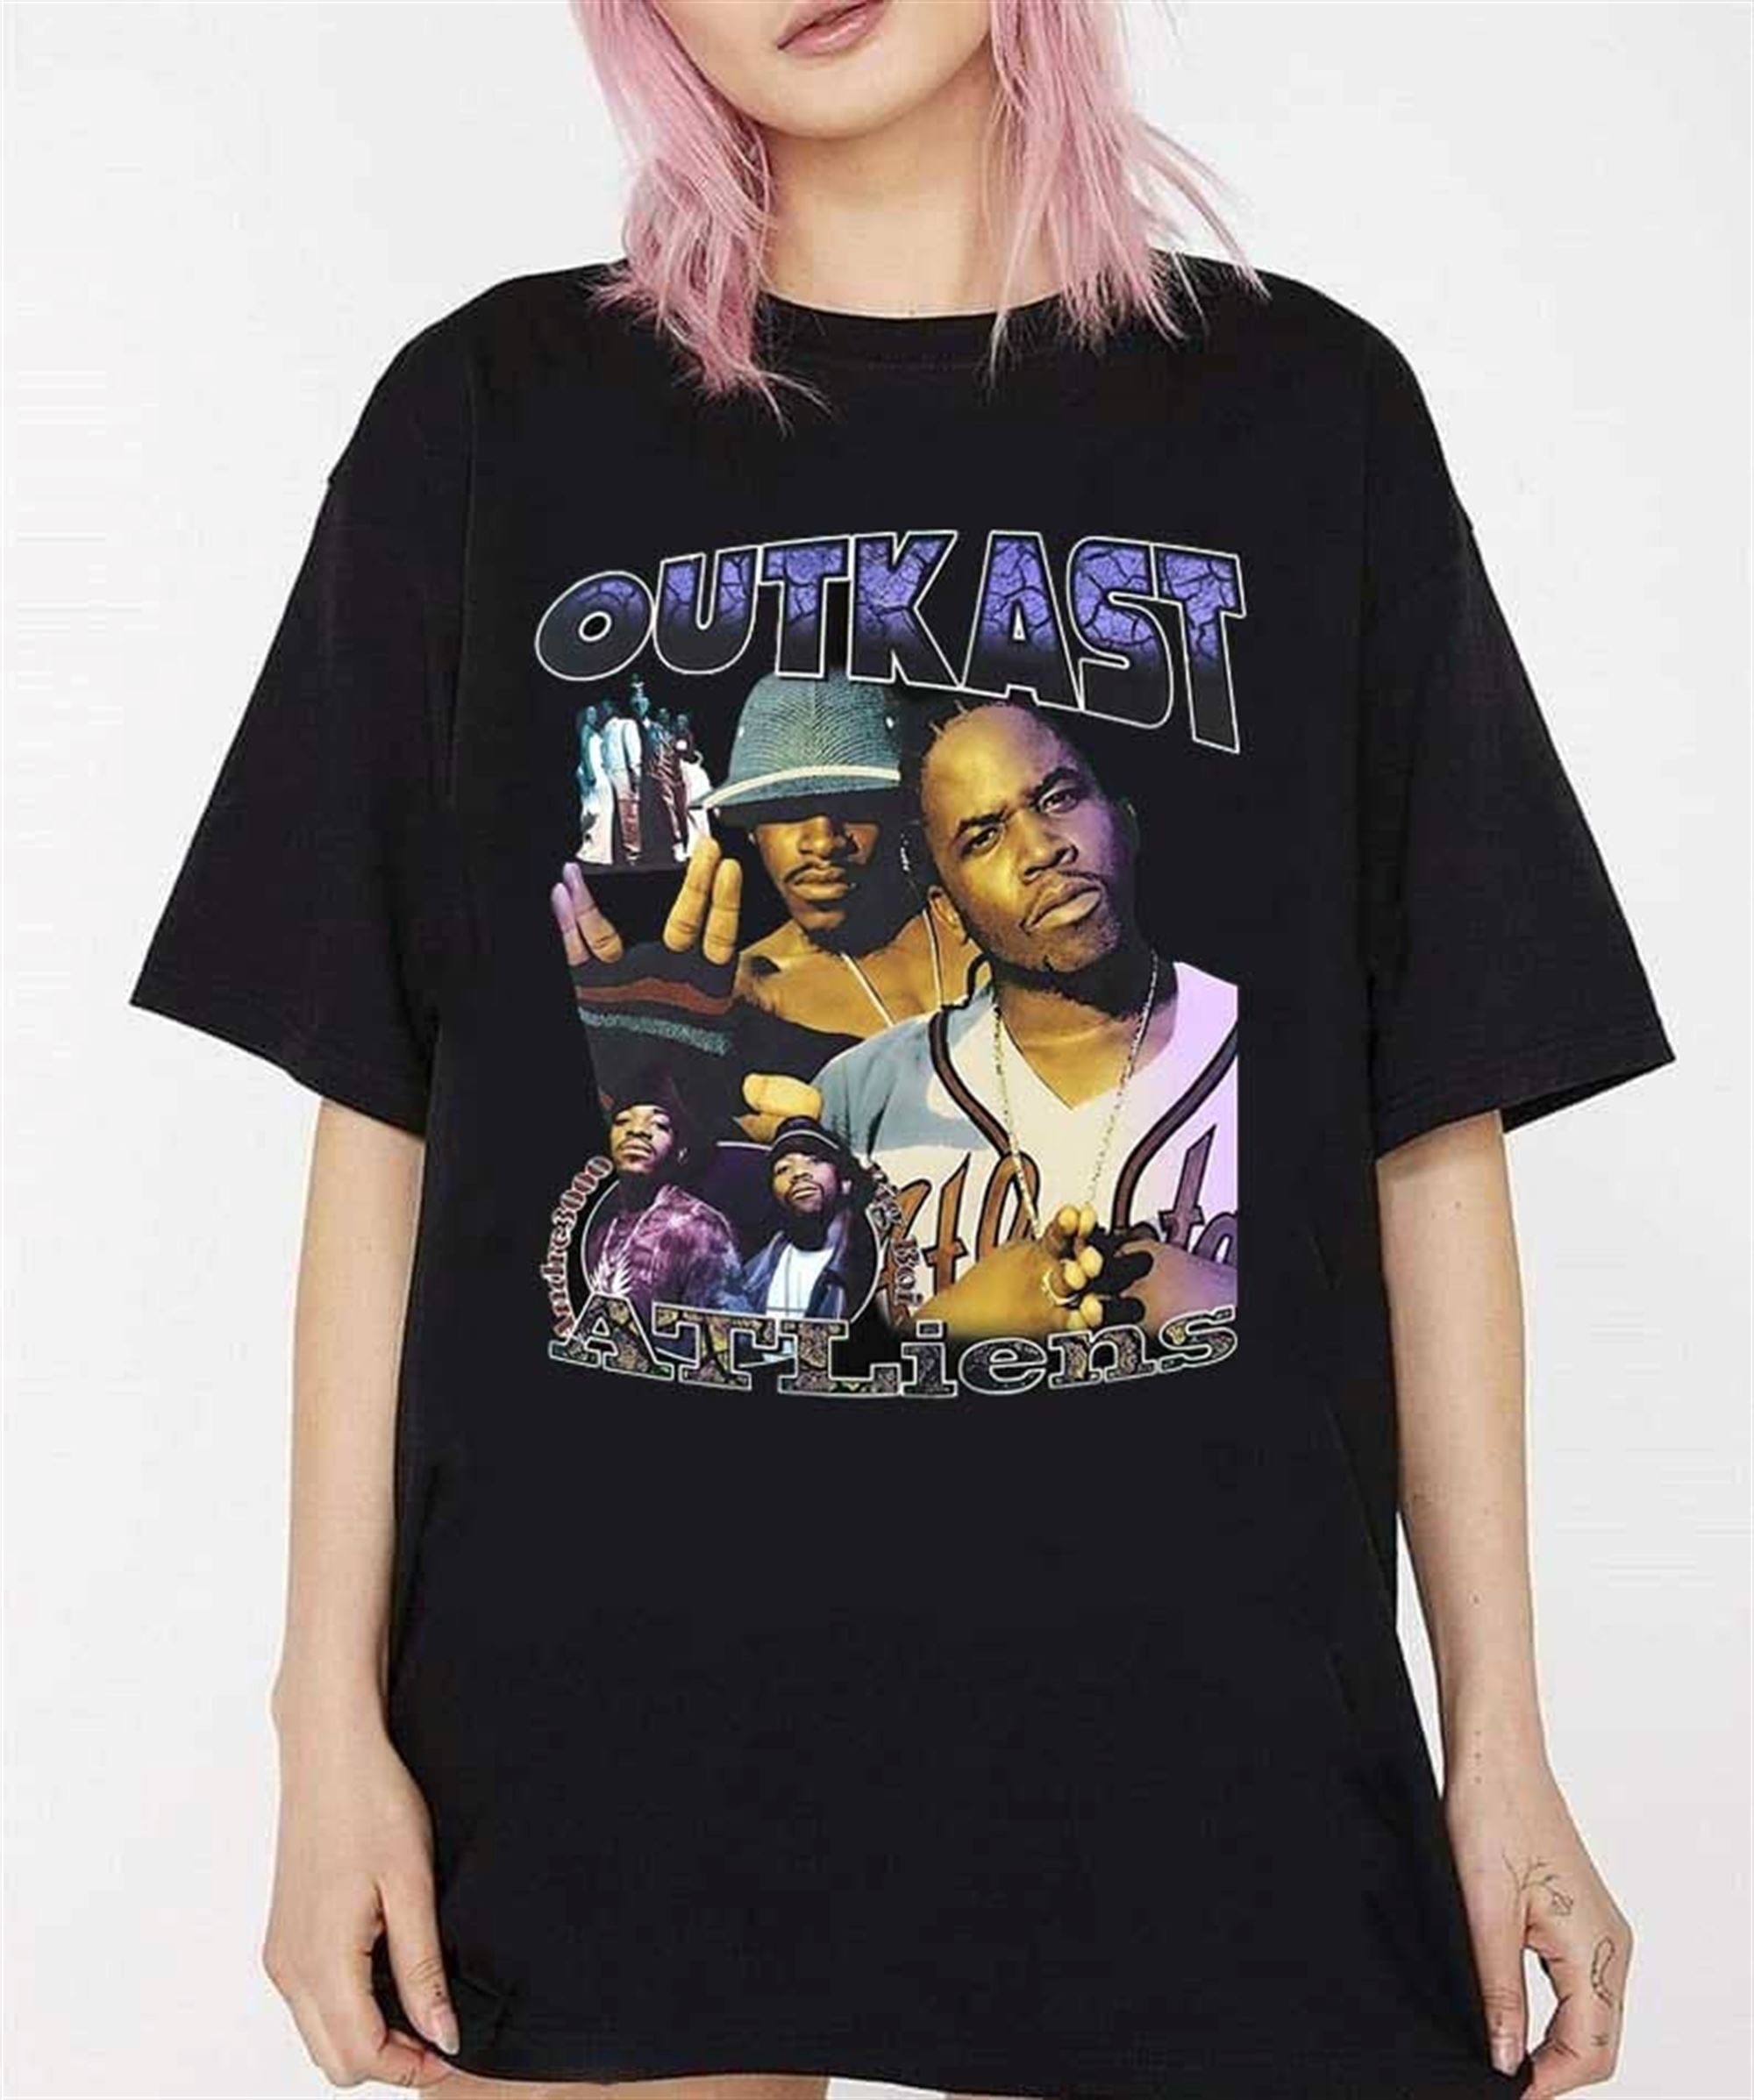 Outkast Band Shirt Outkast Band Hip Hop Shirt Outkast Band Hip Hop Tour Concert Tee 2pac Tupac Raiders Shirt 2pac Gift Shirt Ha